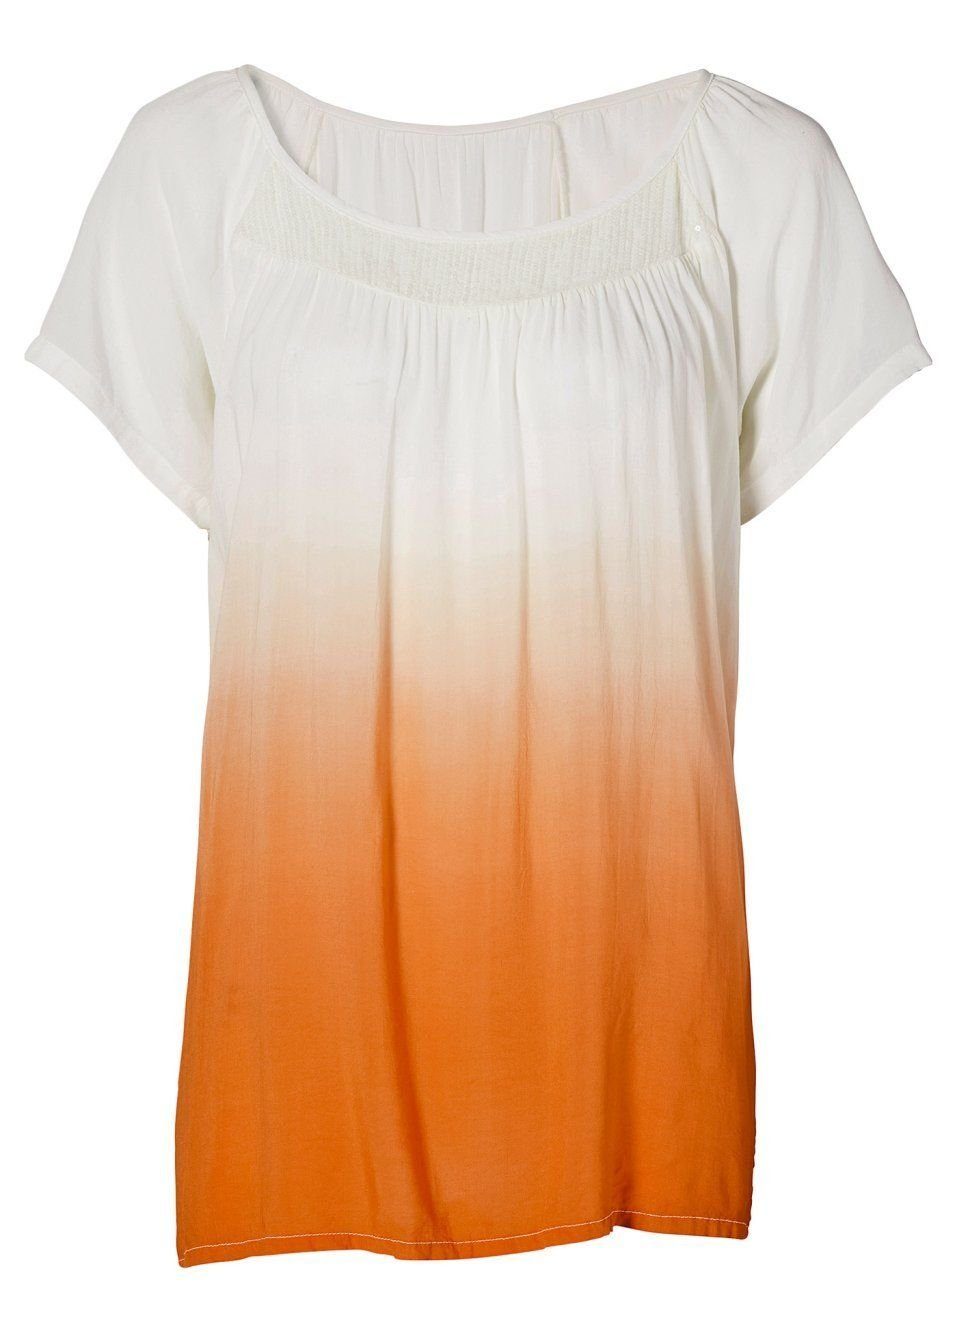 YESET Tunika Tunika Shirt orange Farbverlauf 928589 ecru kurzarm Pailletten Bluse